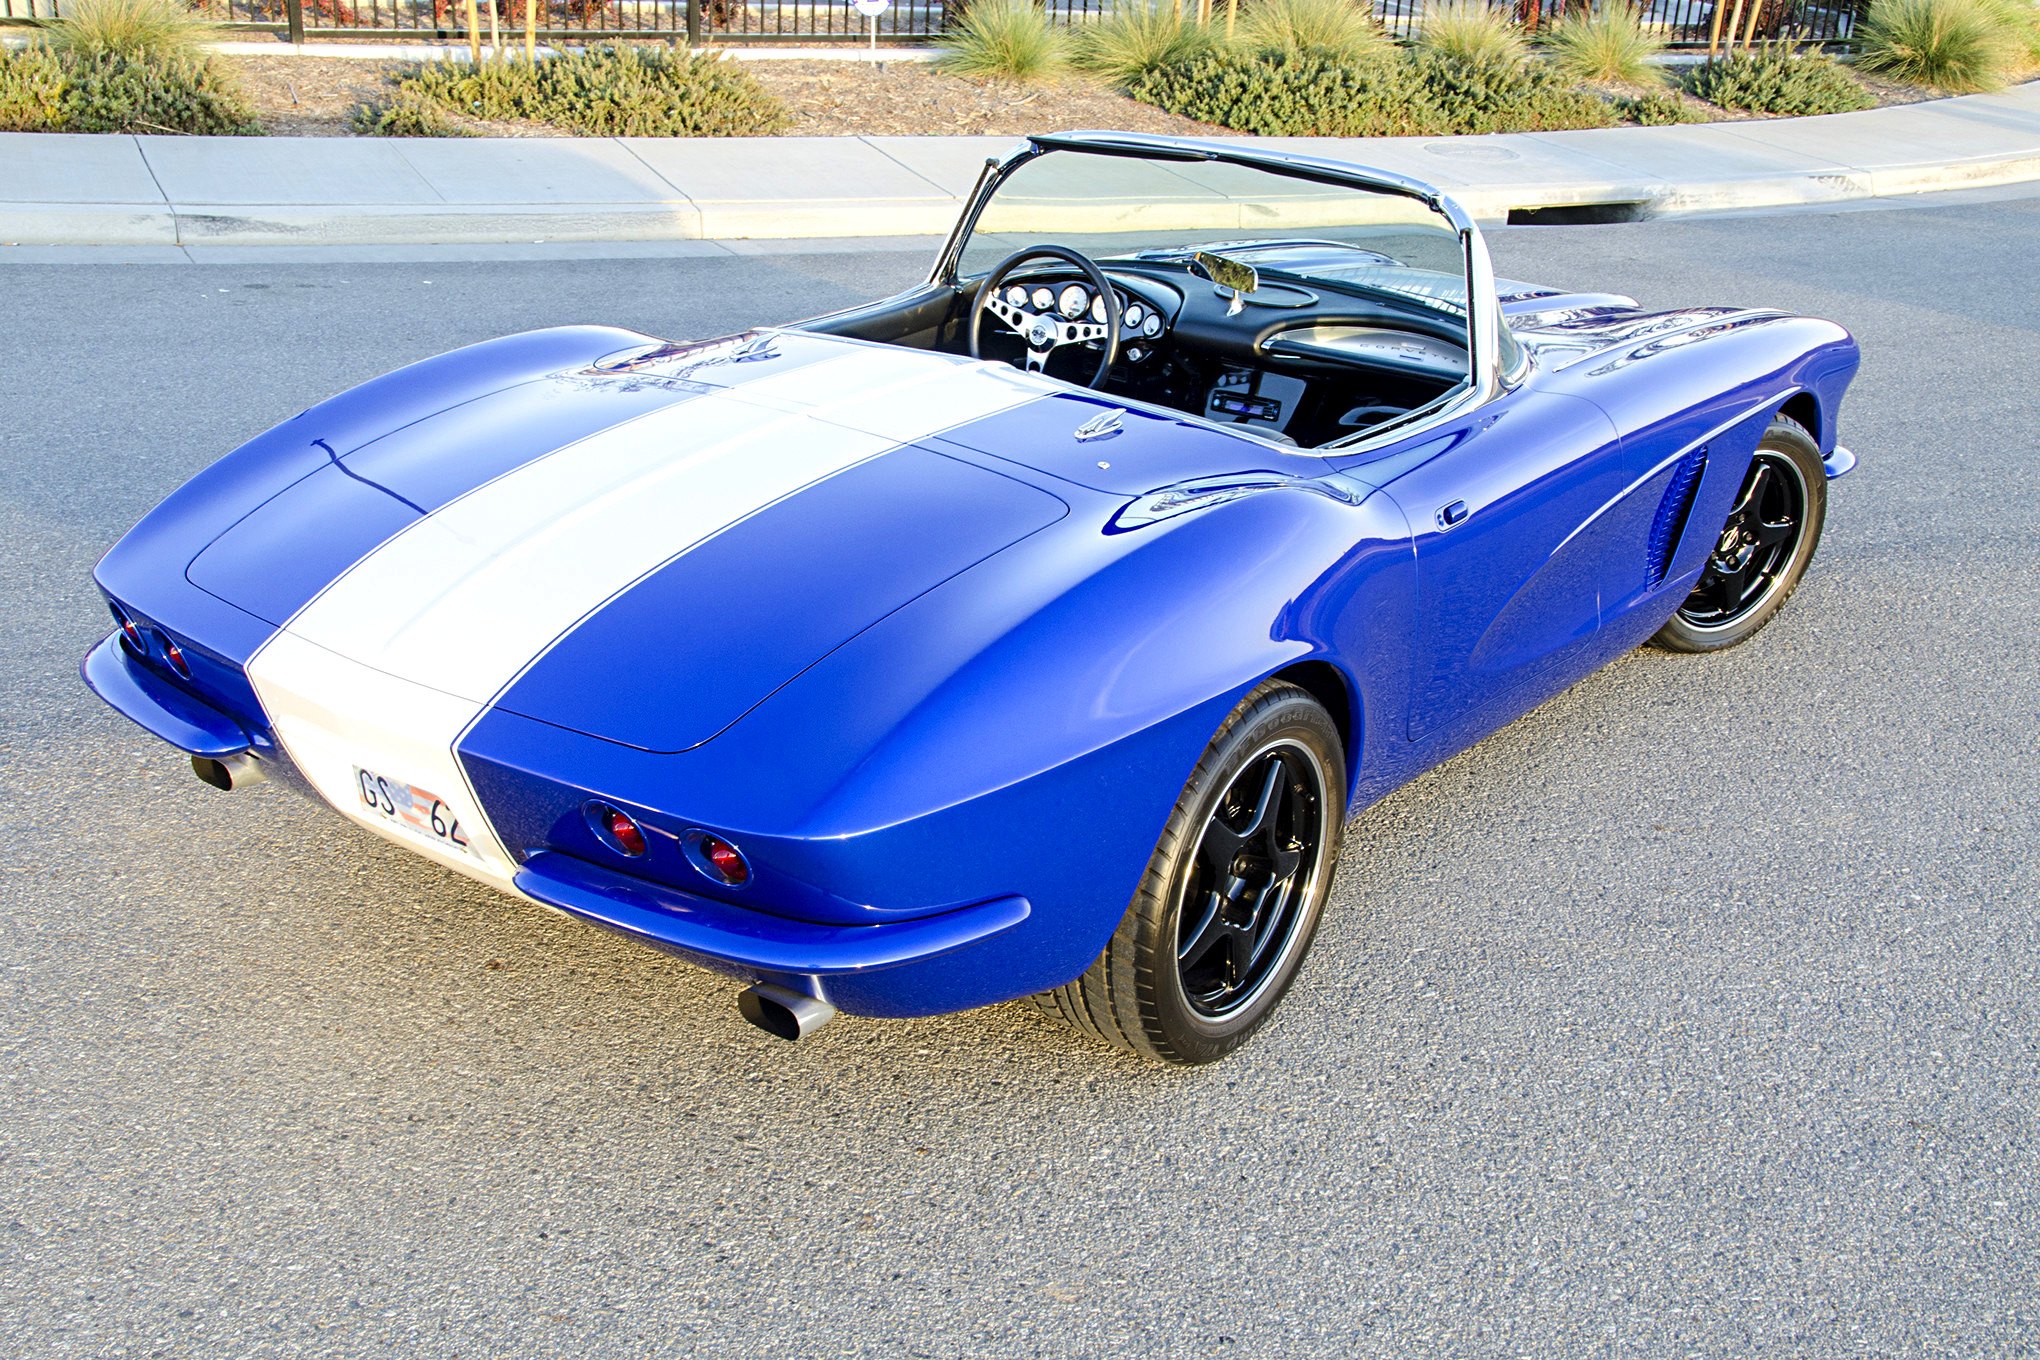 Custom Rear Bumper on Blue Convertible Chevy Corvette - Photo by Steve Temple